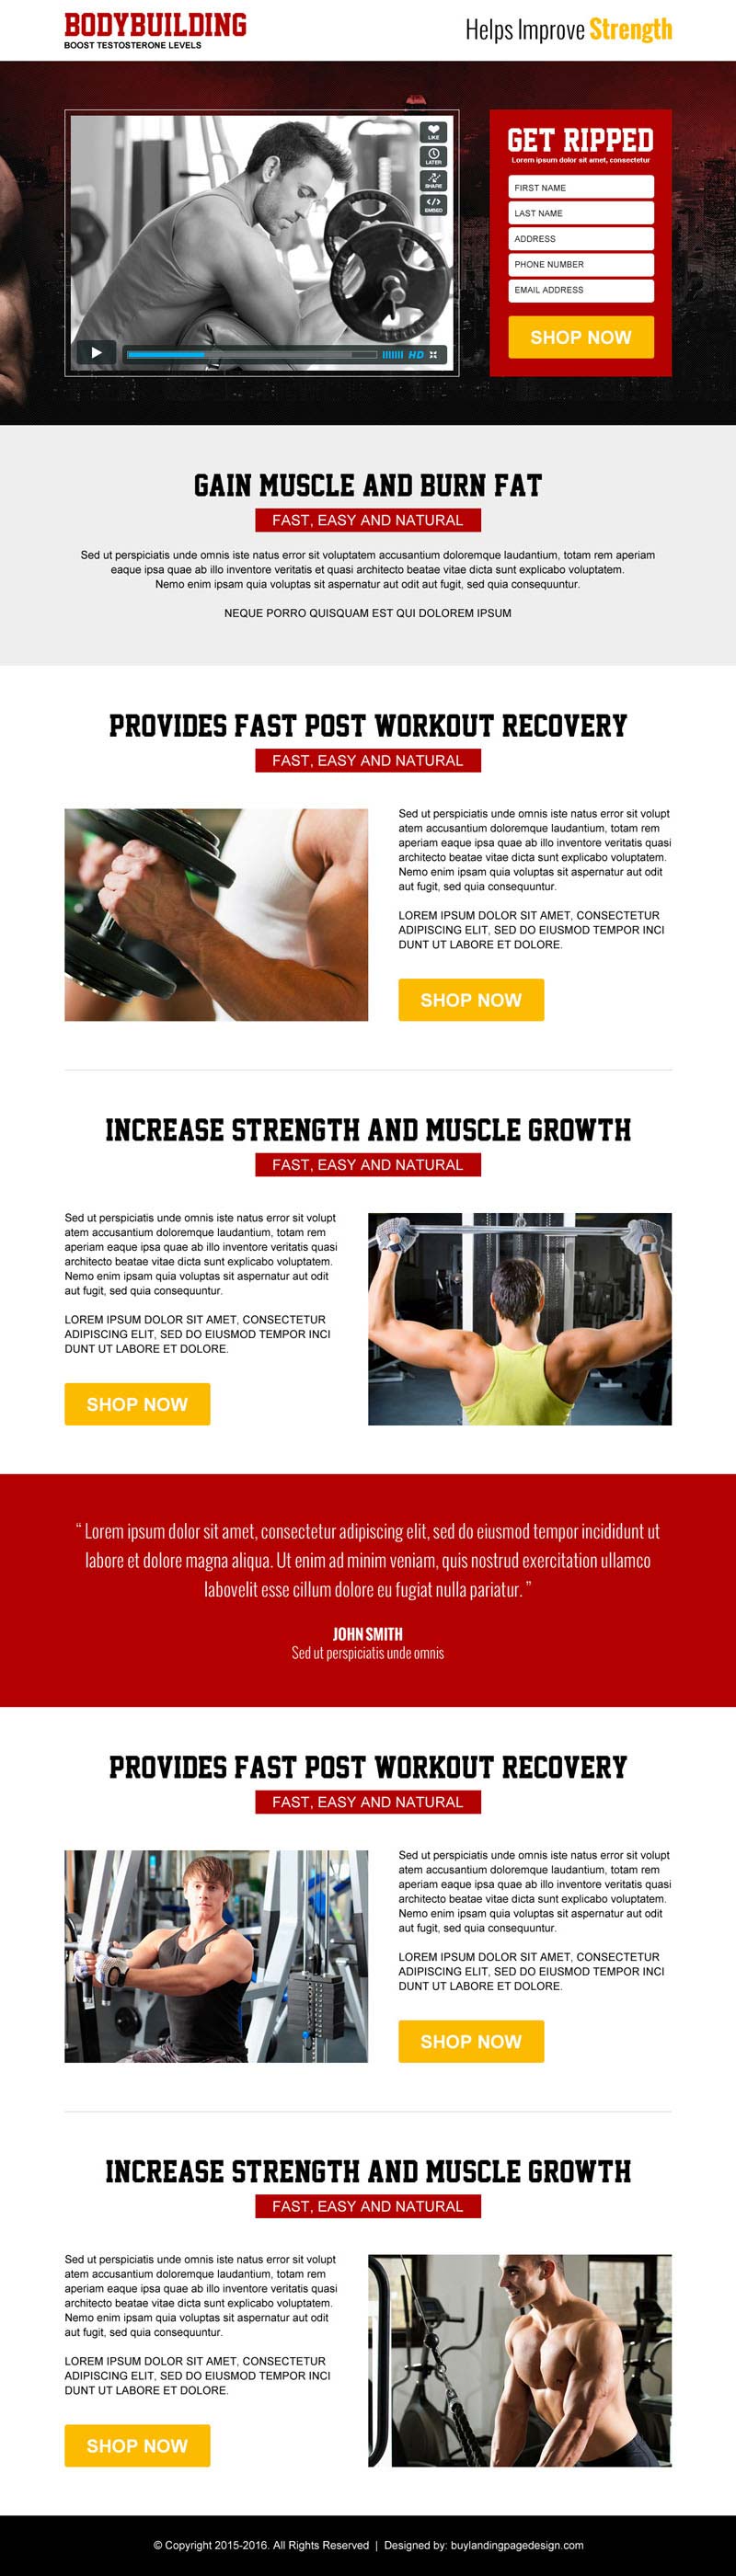 best-bodybuilding-business-service-responsive-video-landing-page-design-004